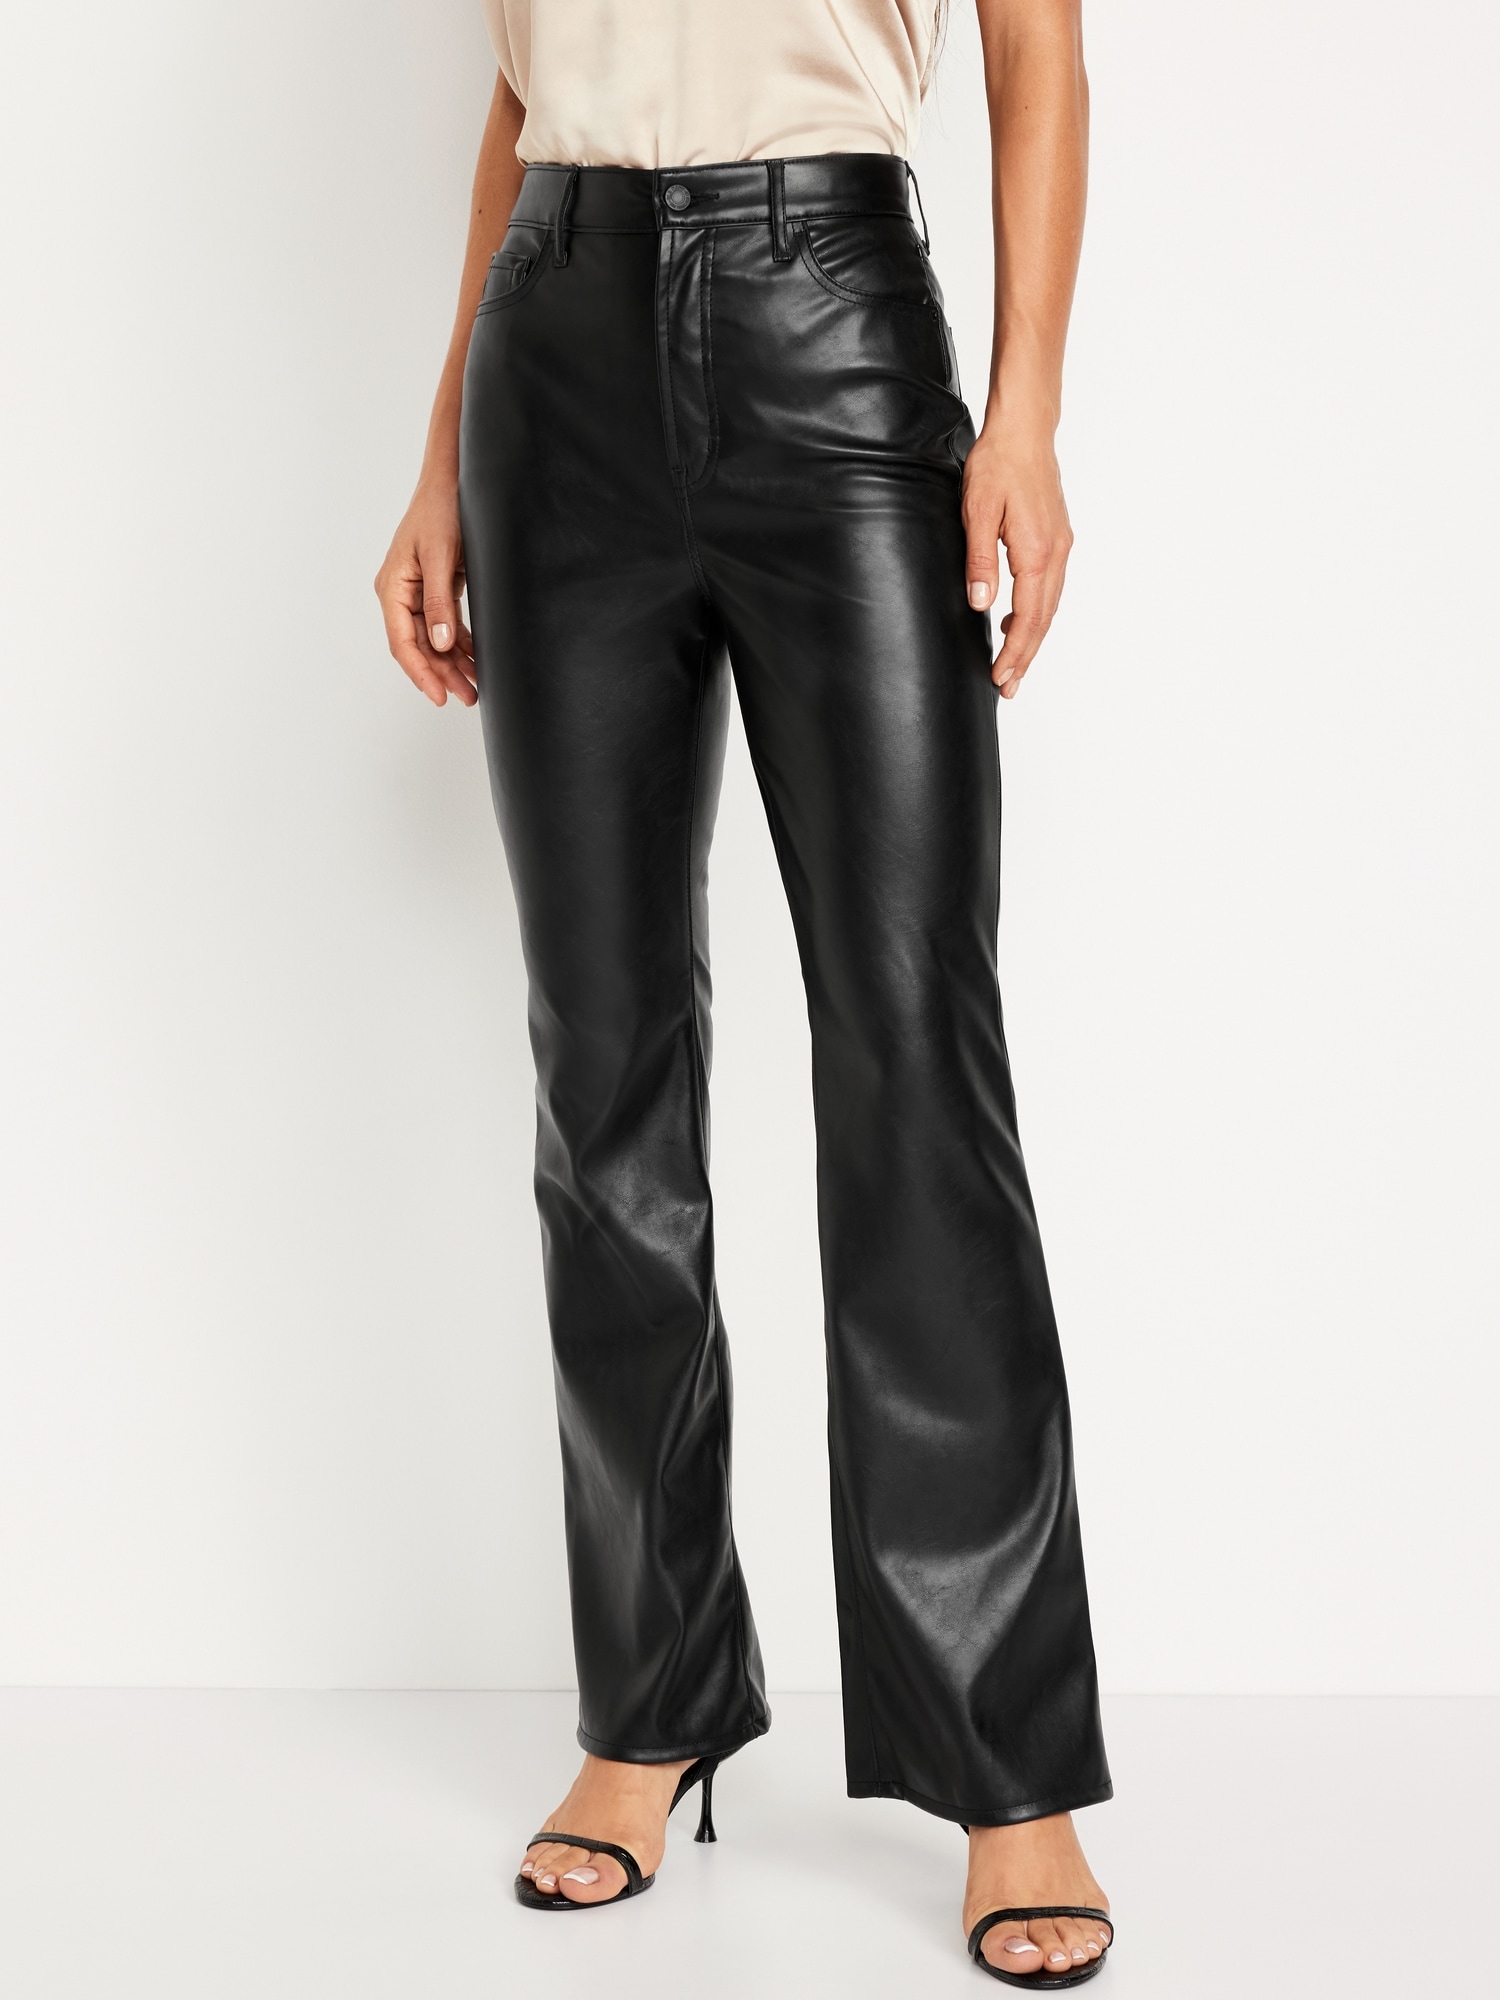 Leather Pants Trend Fall 2020, Vegan & Genuine Options